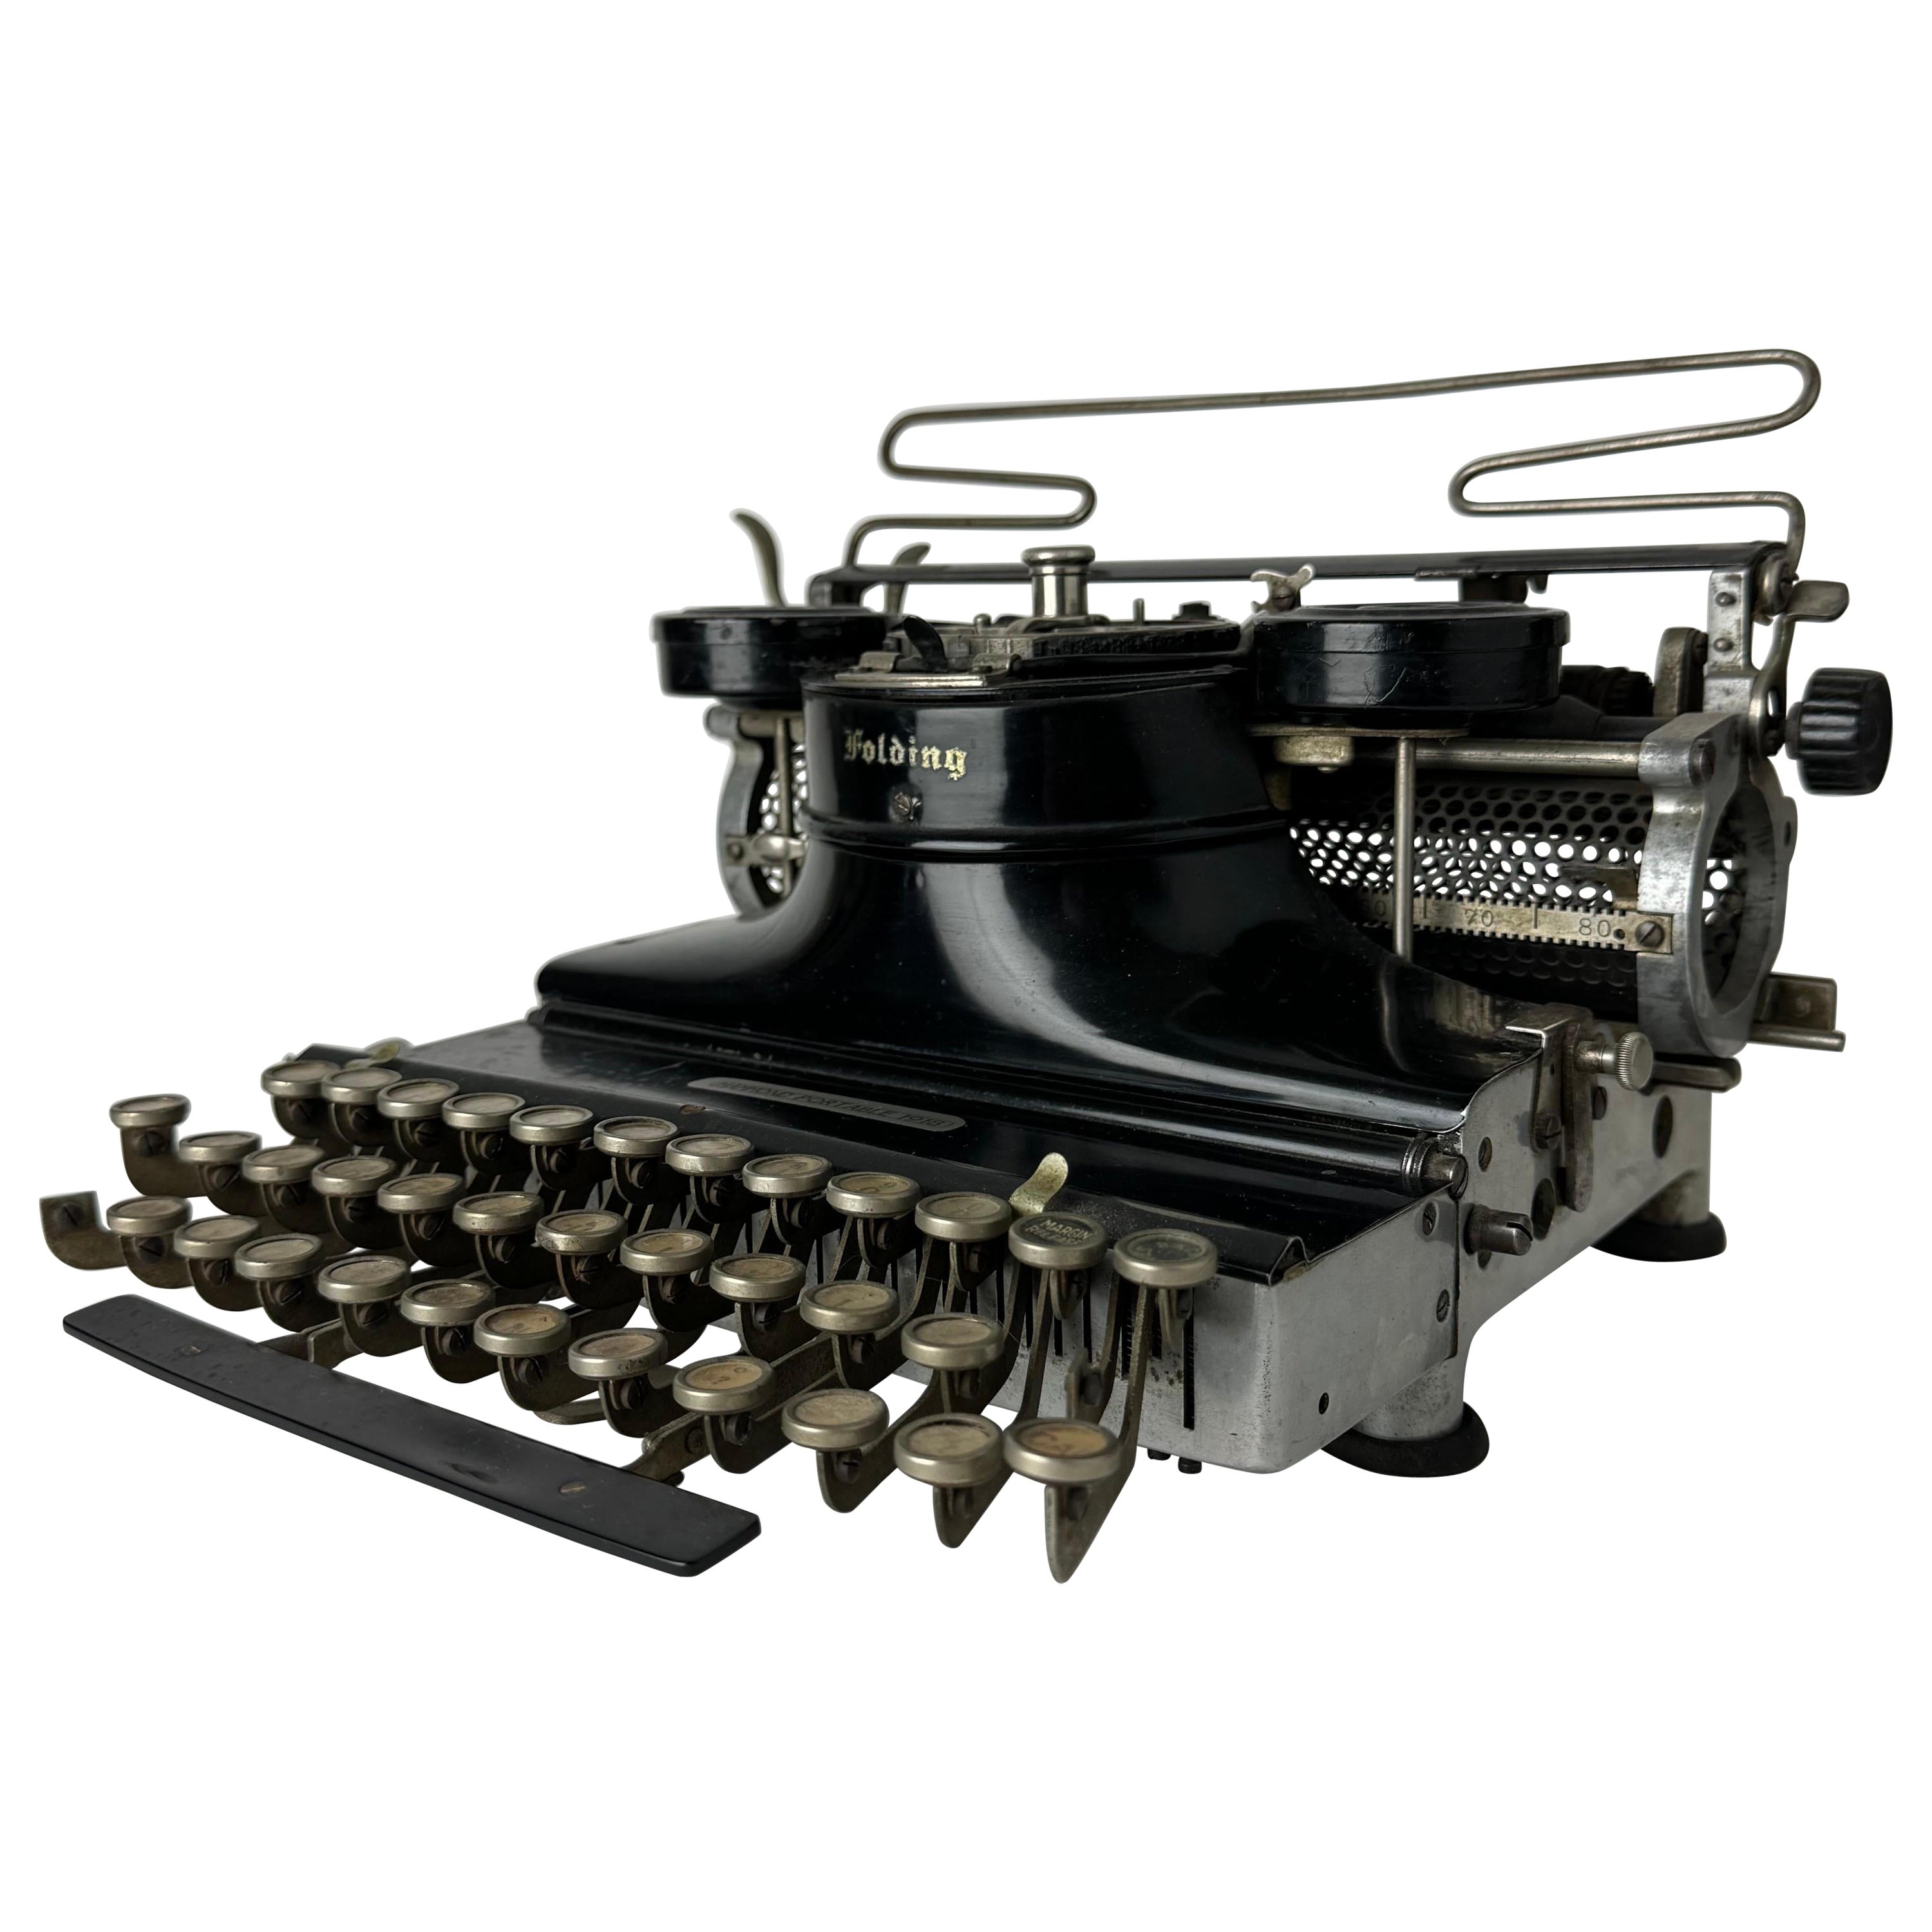 1918 Antique Hammond Folding Portable Typewriter For Sale